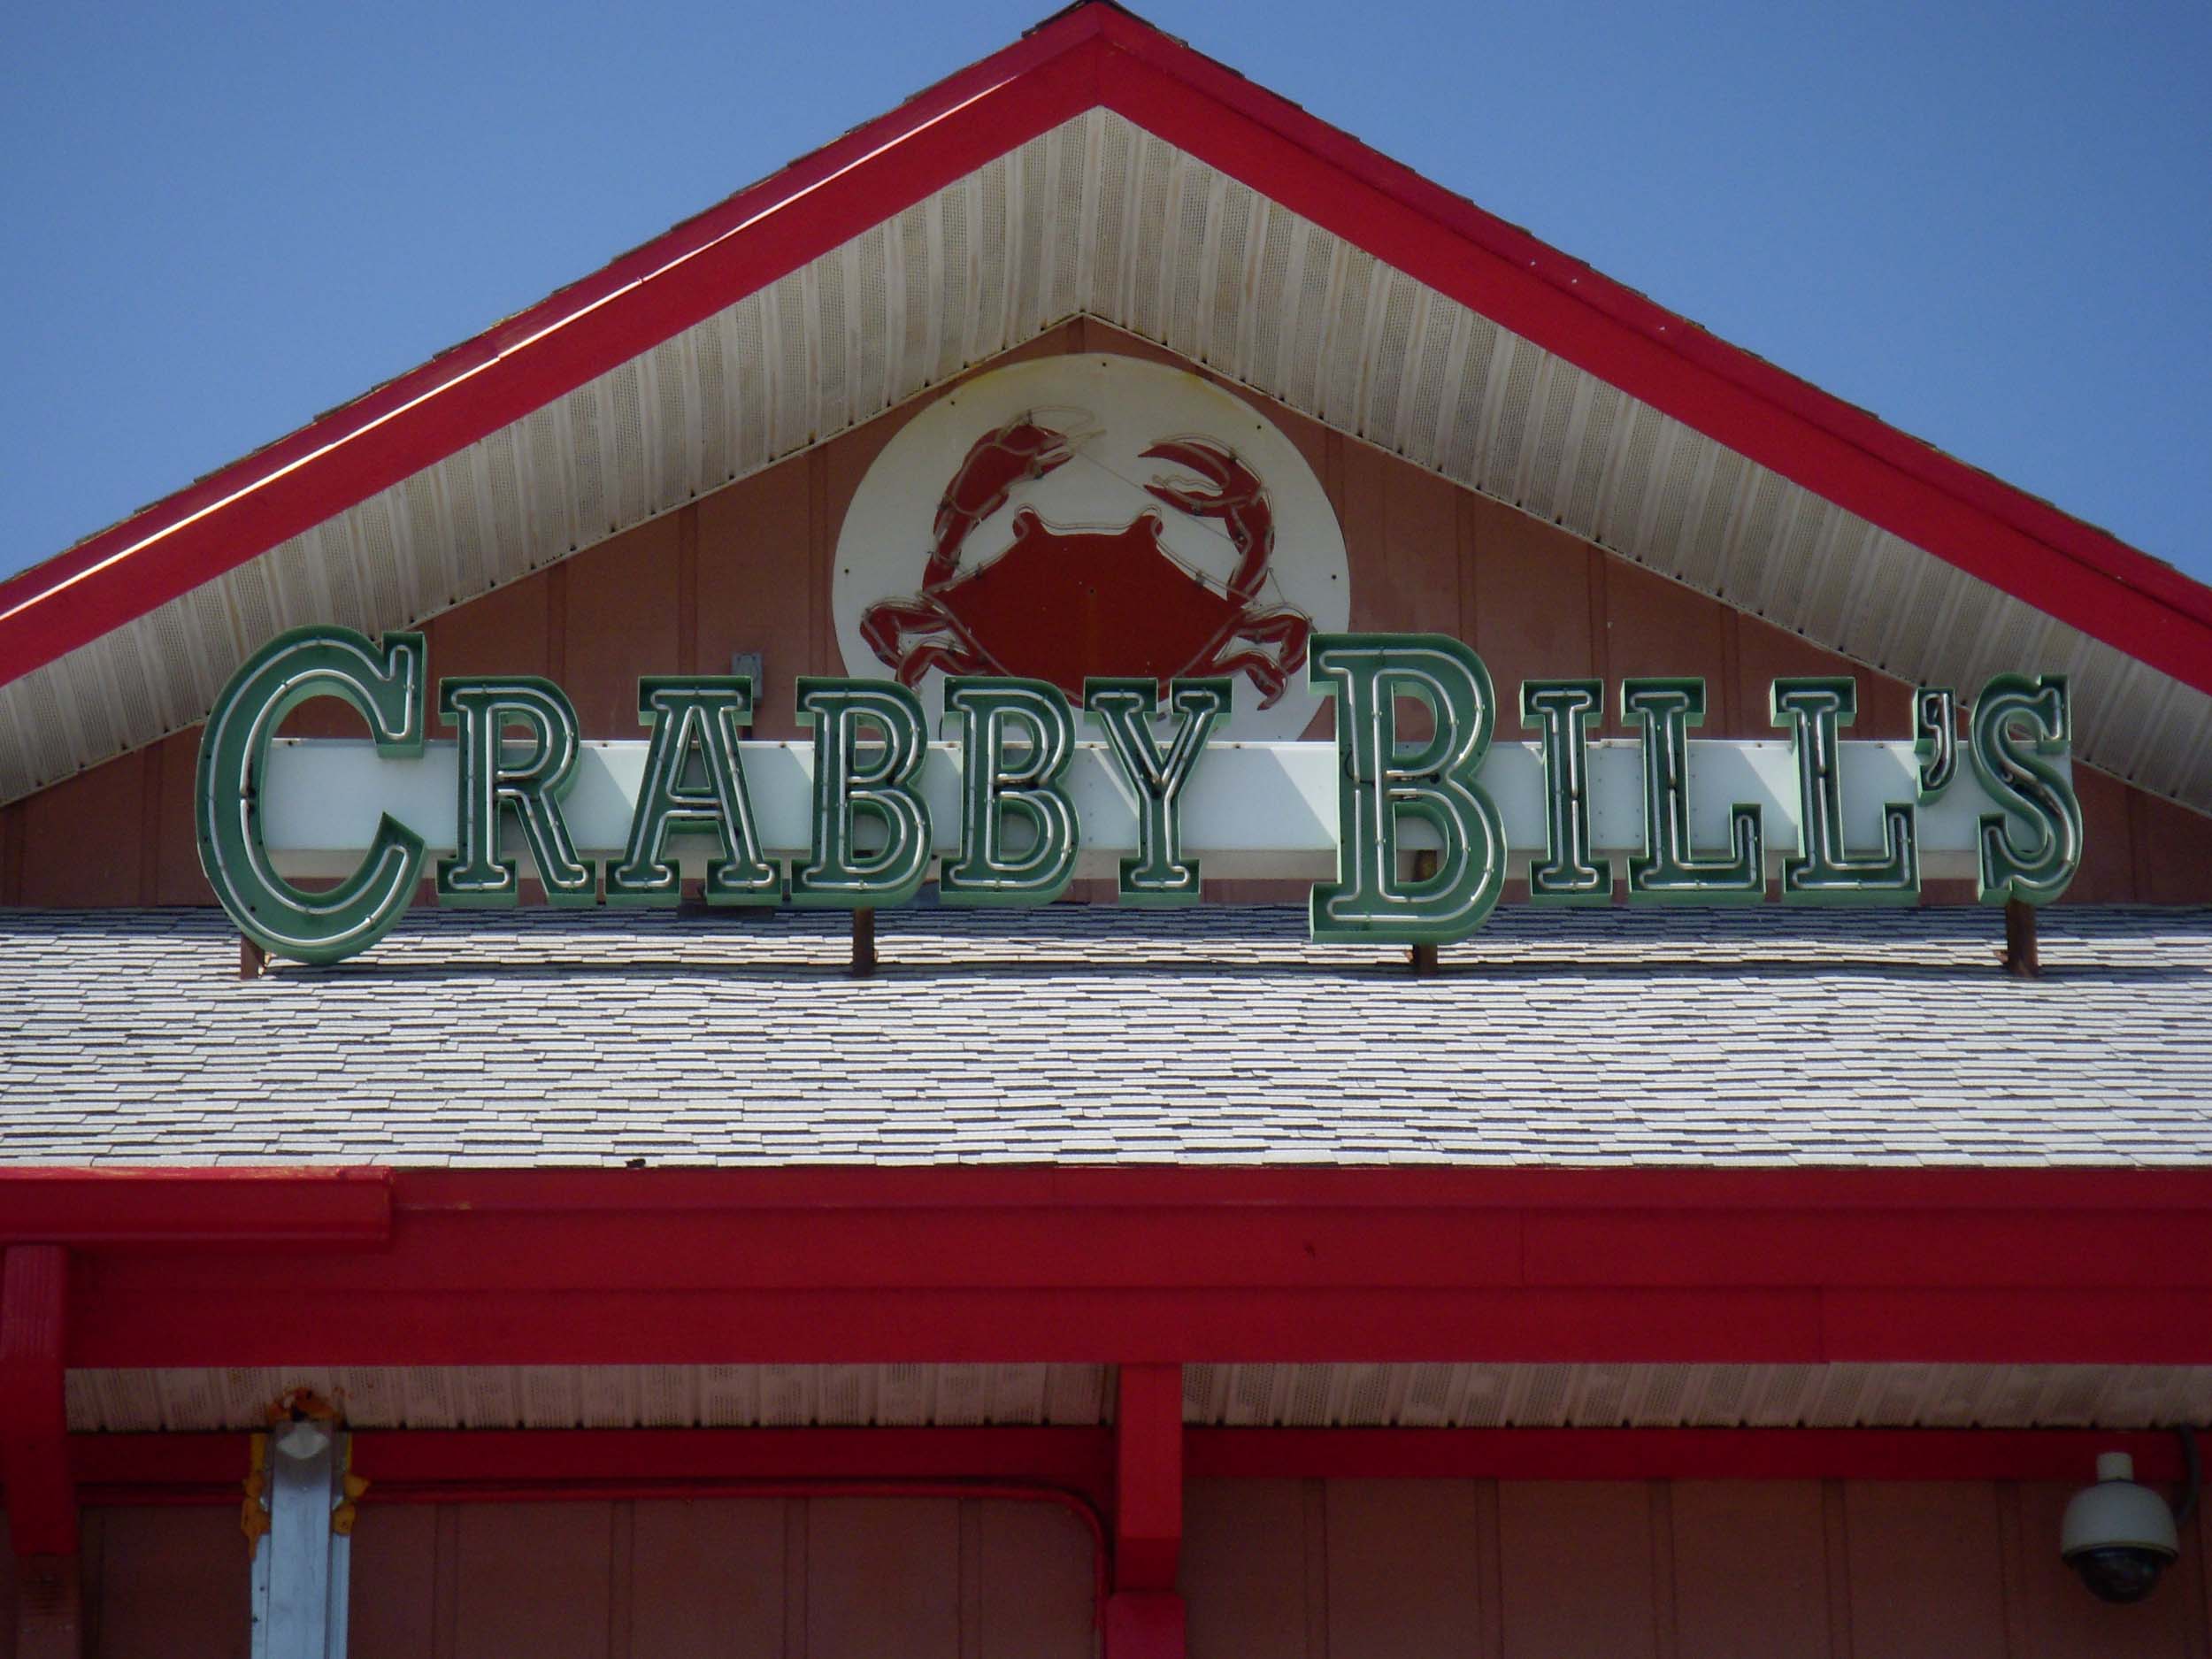 Crabby Bill's Entrance